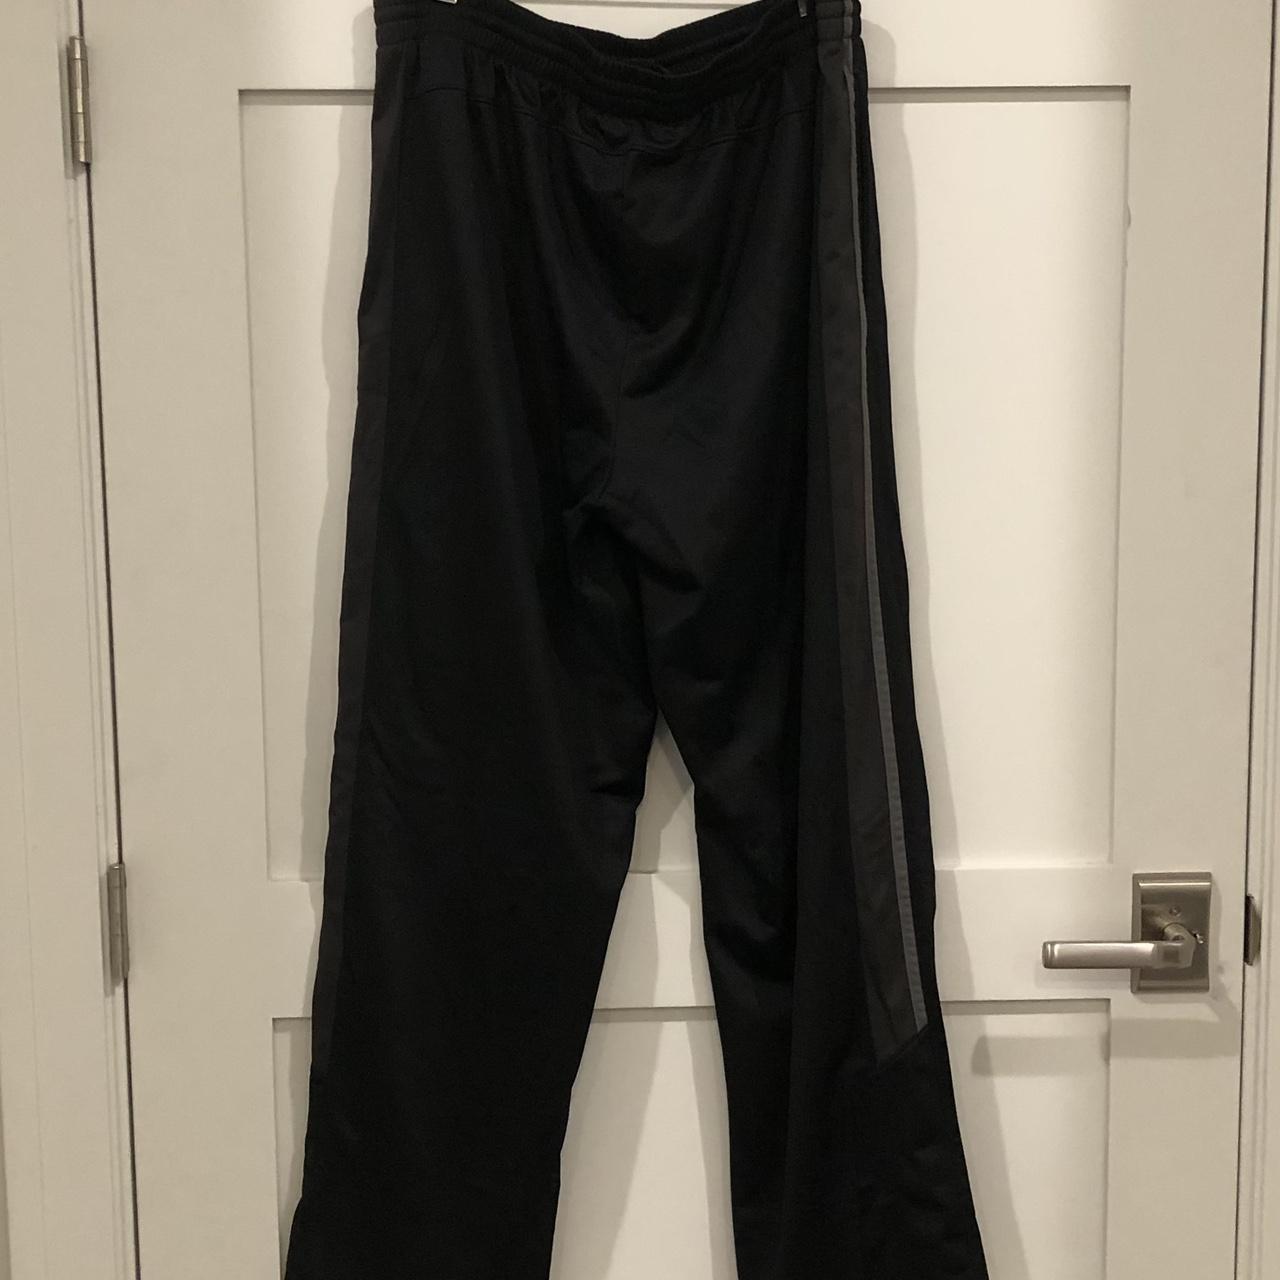 Tek Gear athletic pants. Black with grey and darker - Depop